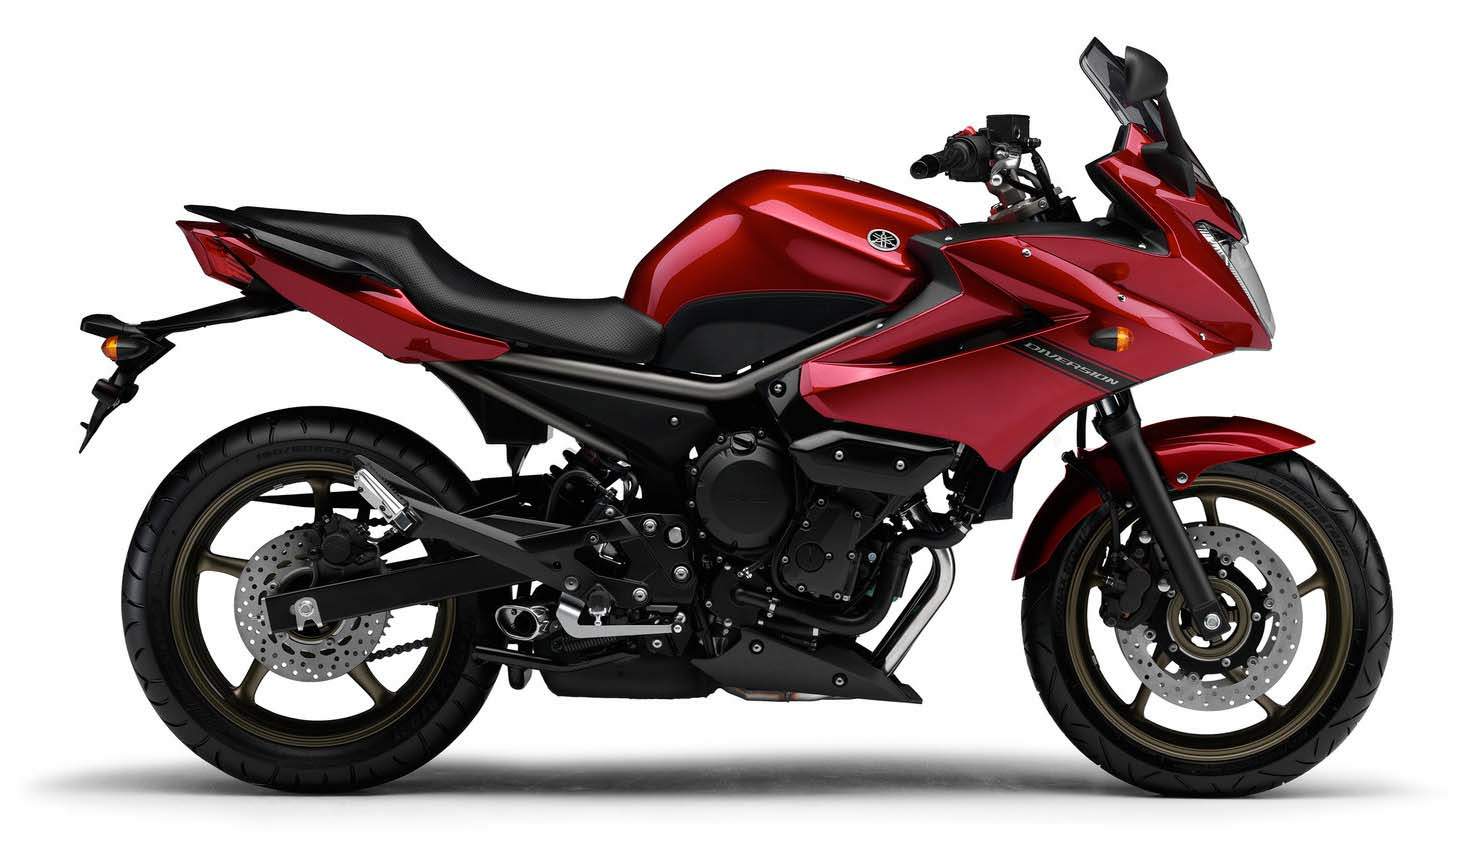 http://www.motorcyclespecs.co.za/Gallery%20C/Yamaha%20XJ6%20Diversion%2009%20%204.jpg